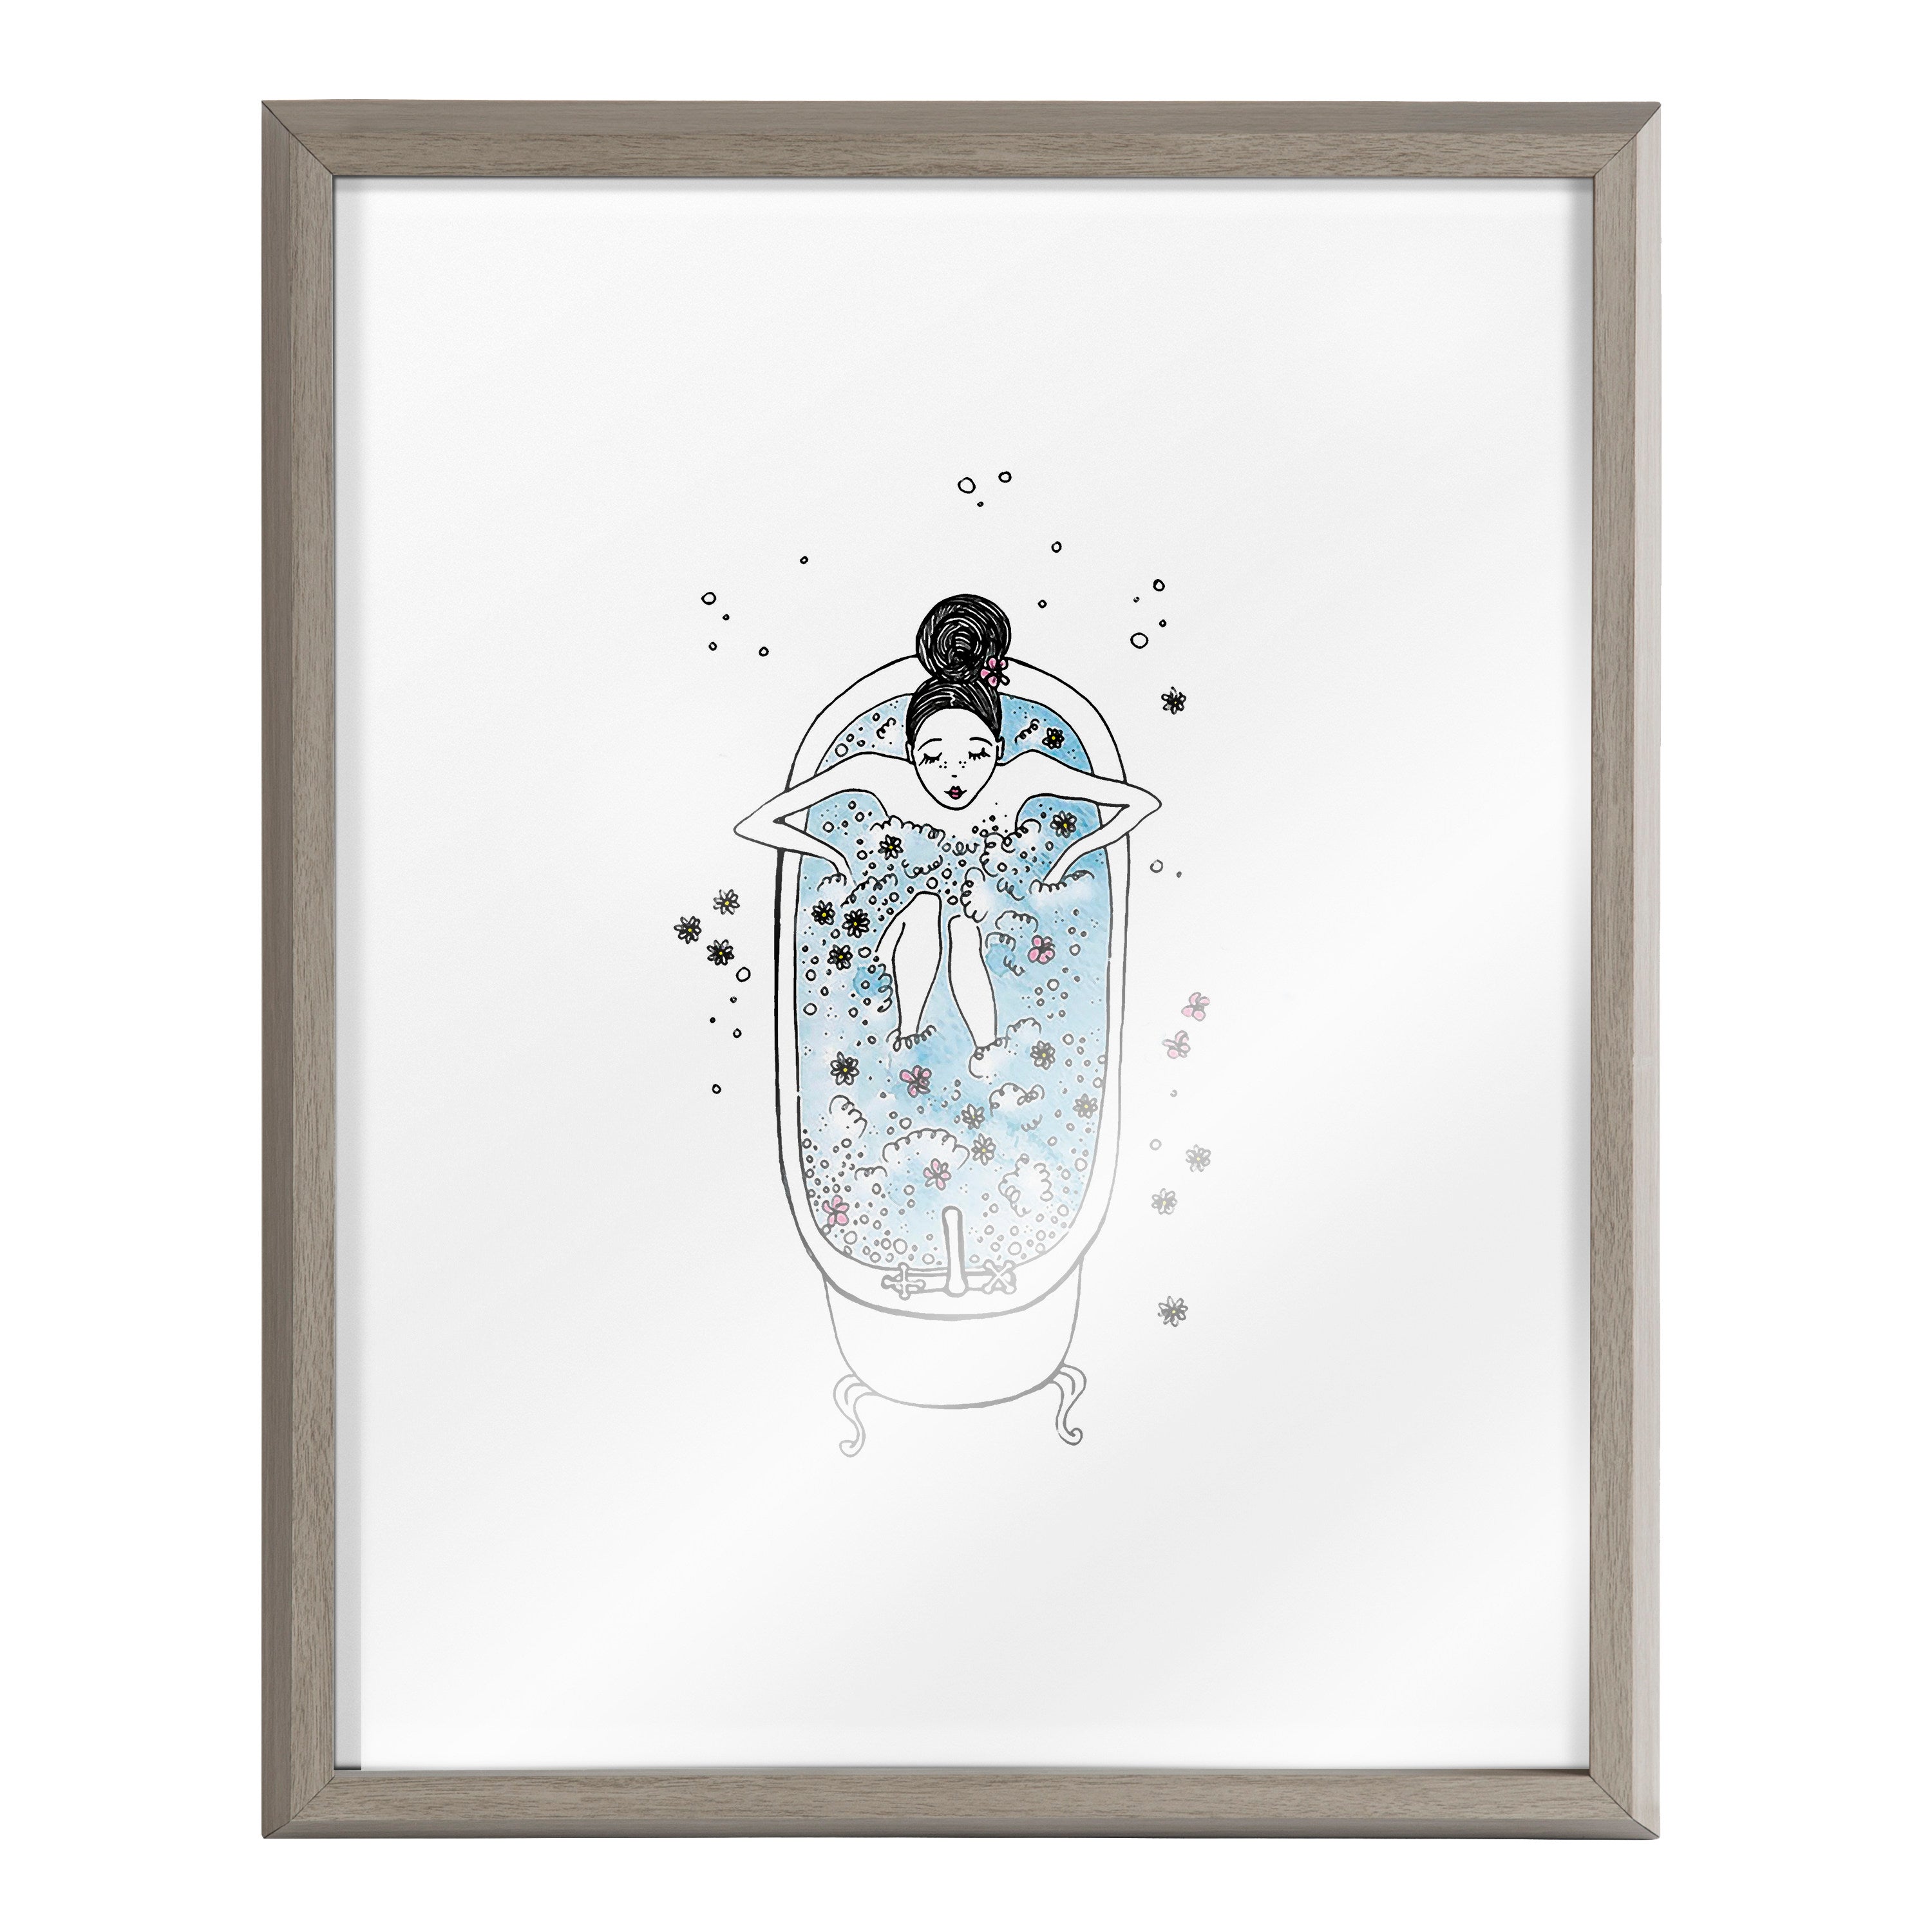 Blake Girl in a Bath Framed Printed Glass by Viola Kreczmer